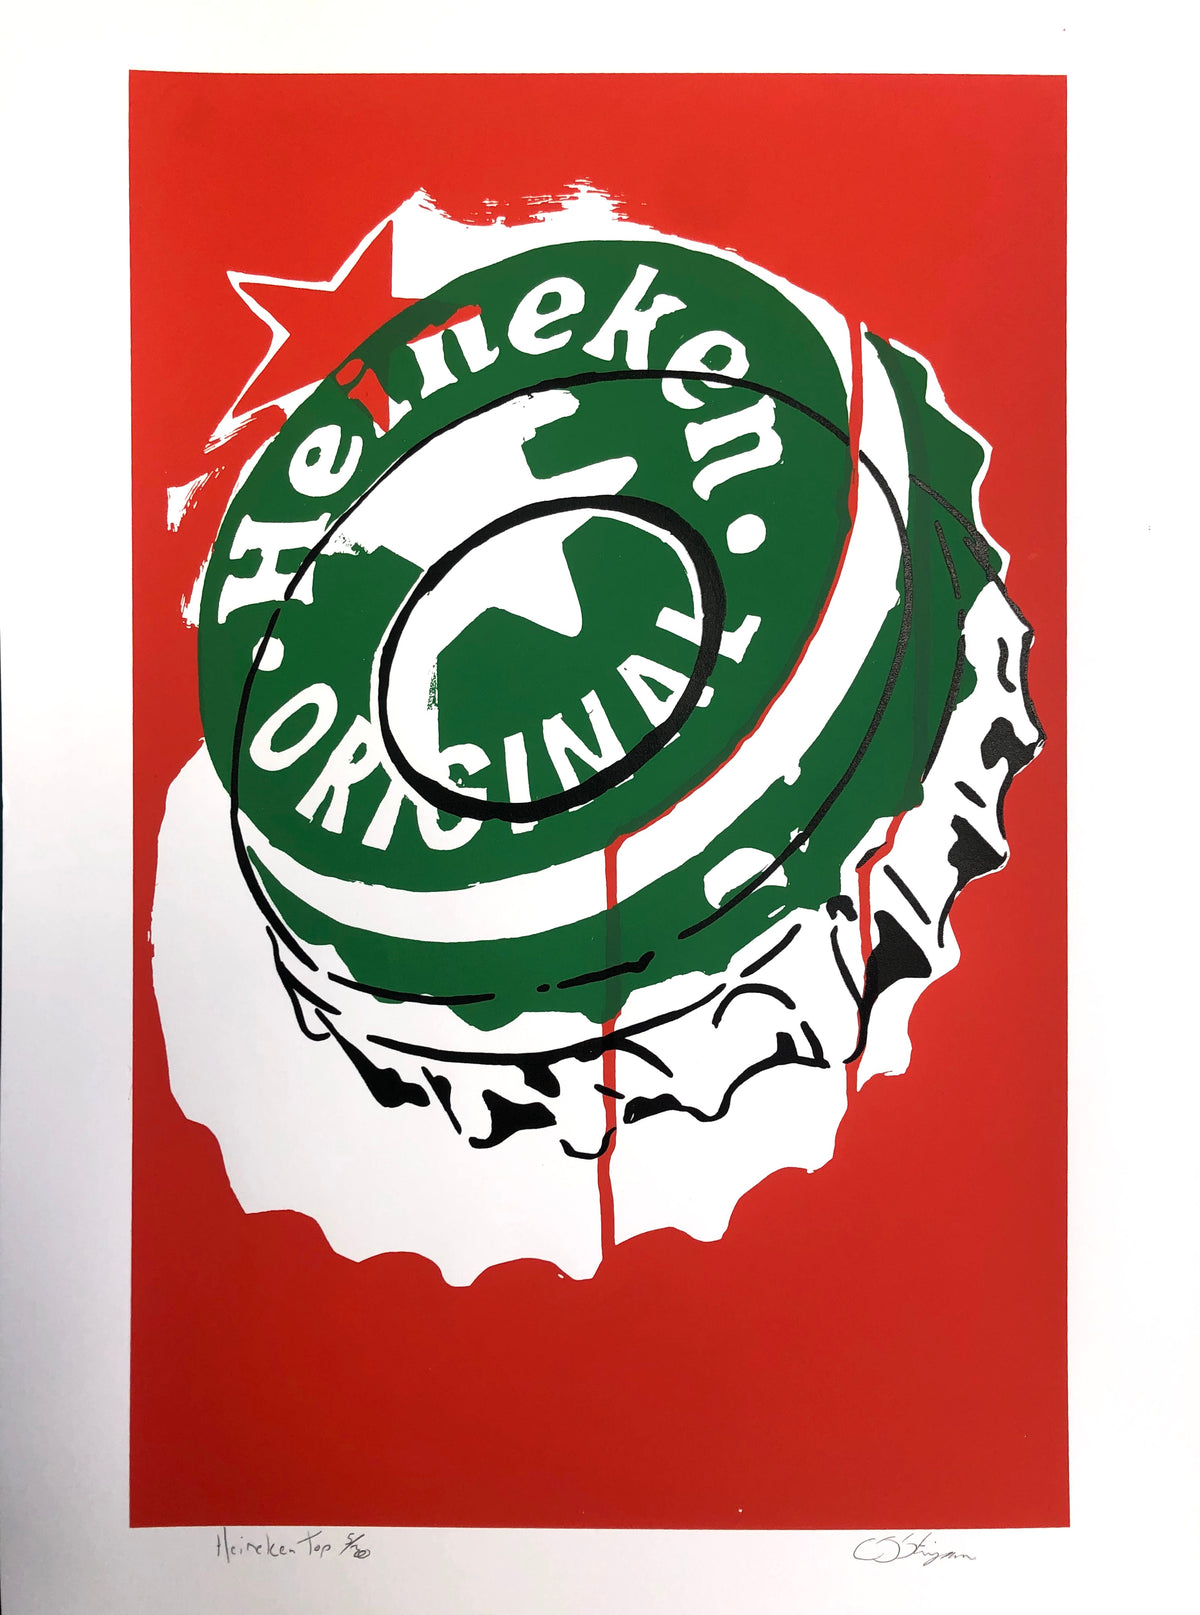 Heineken Top by Carl Stimpson